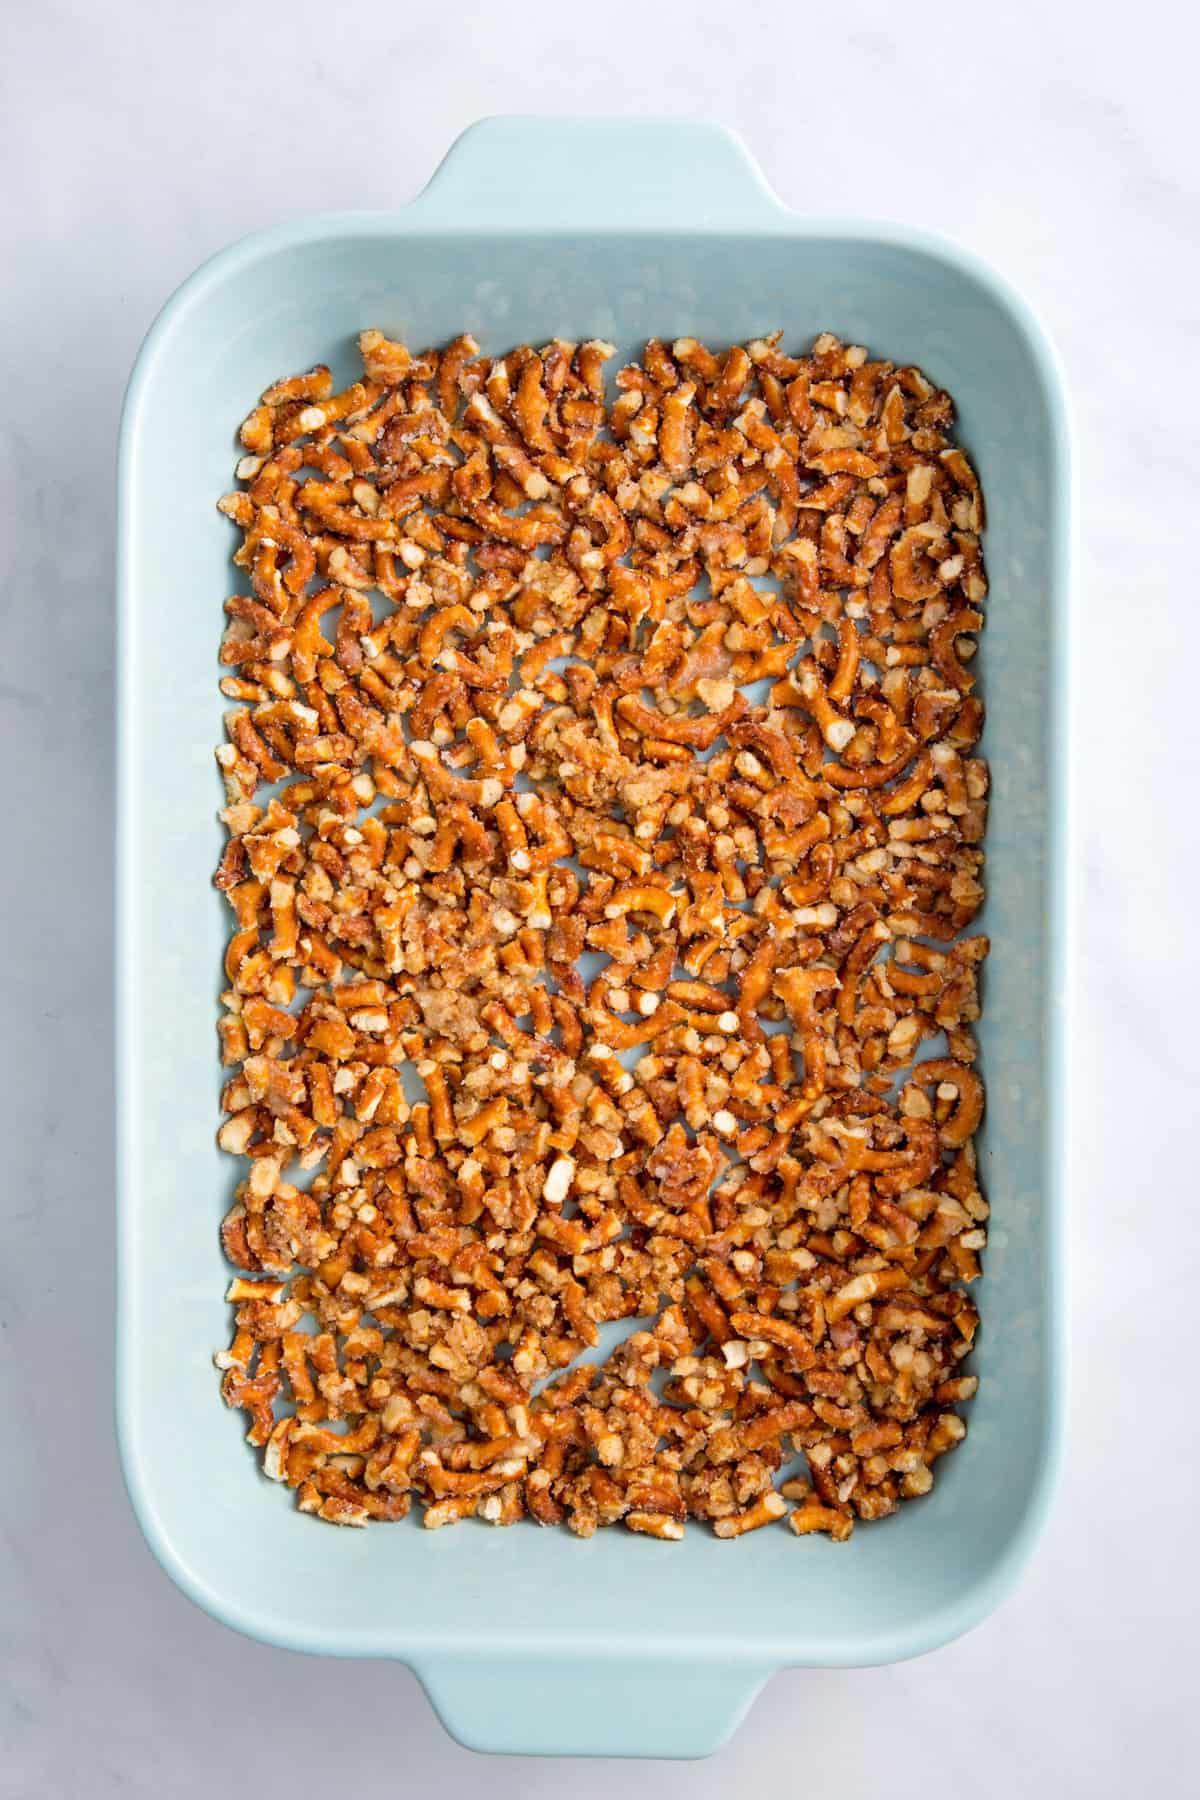 crushed pretzels in a large blue casserole dish